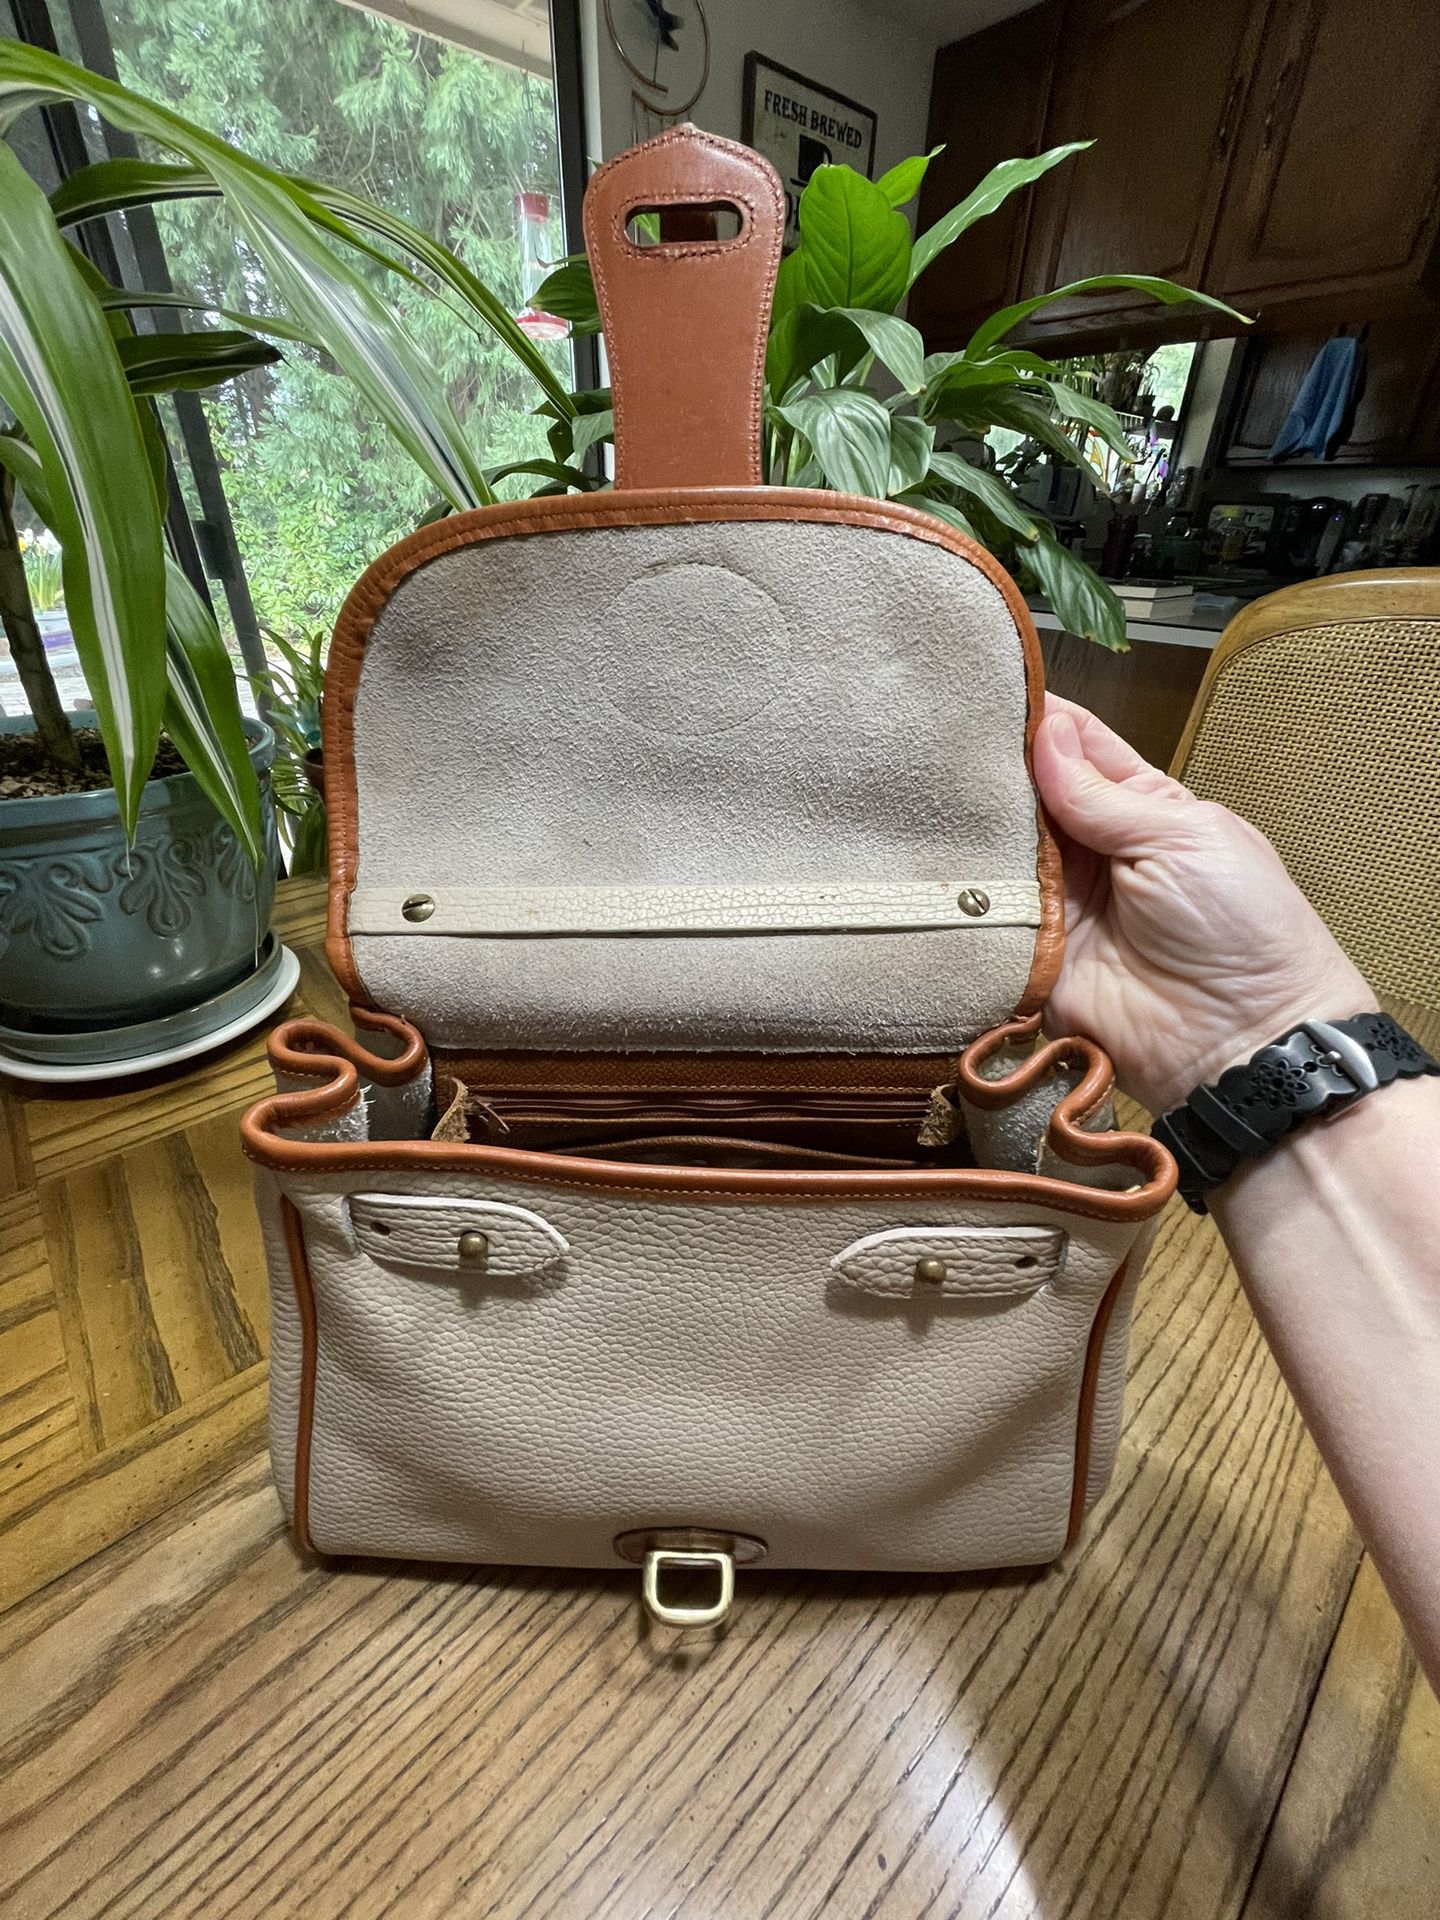 Rare! Vintage Dooney & Bourke Doctor Handbag Purse for Sale in Wilsonville,  OR - OfferUp